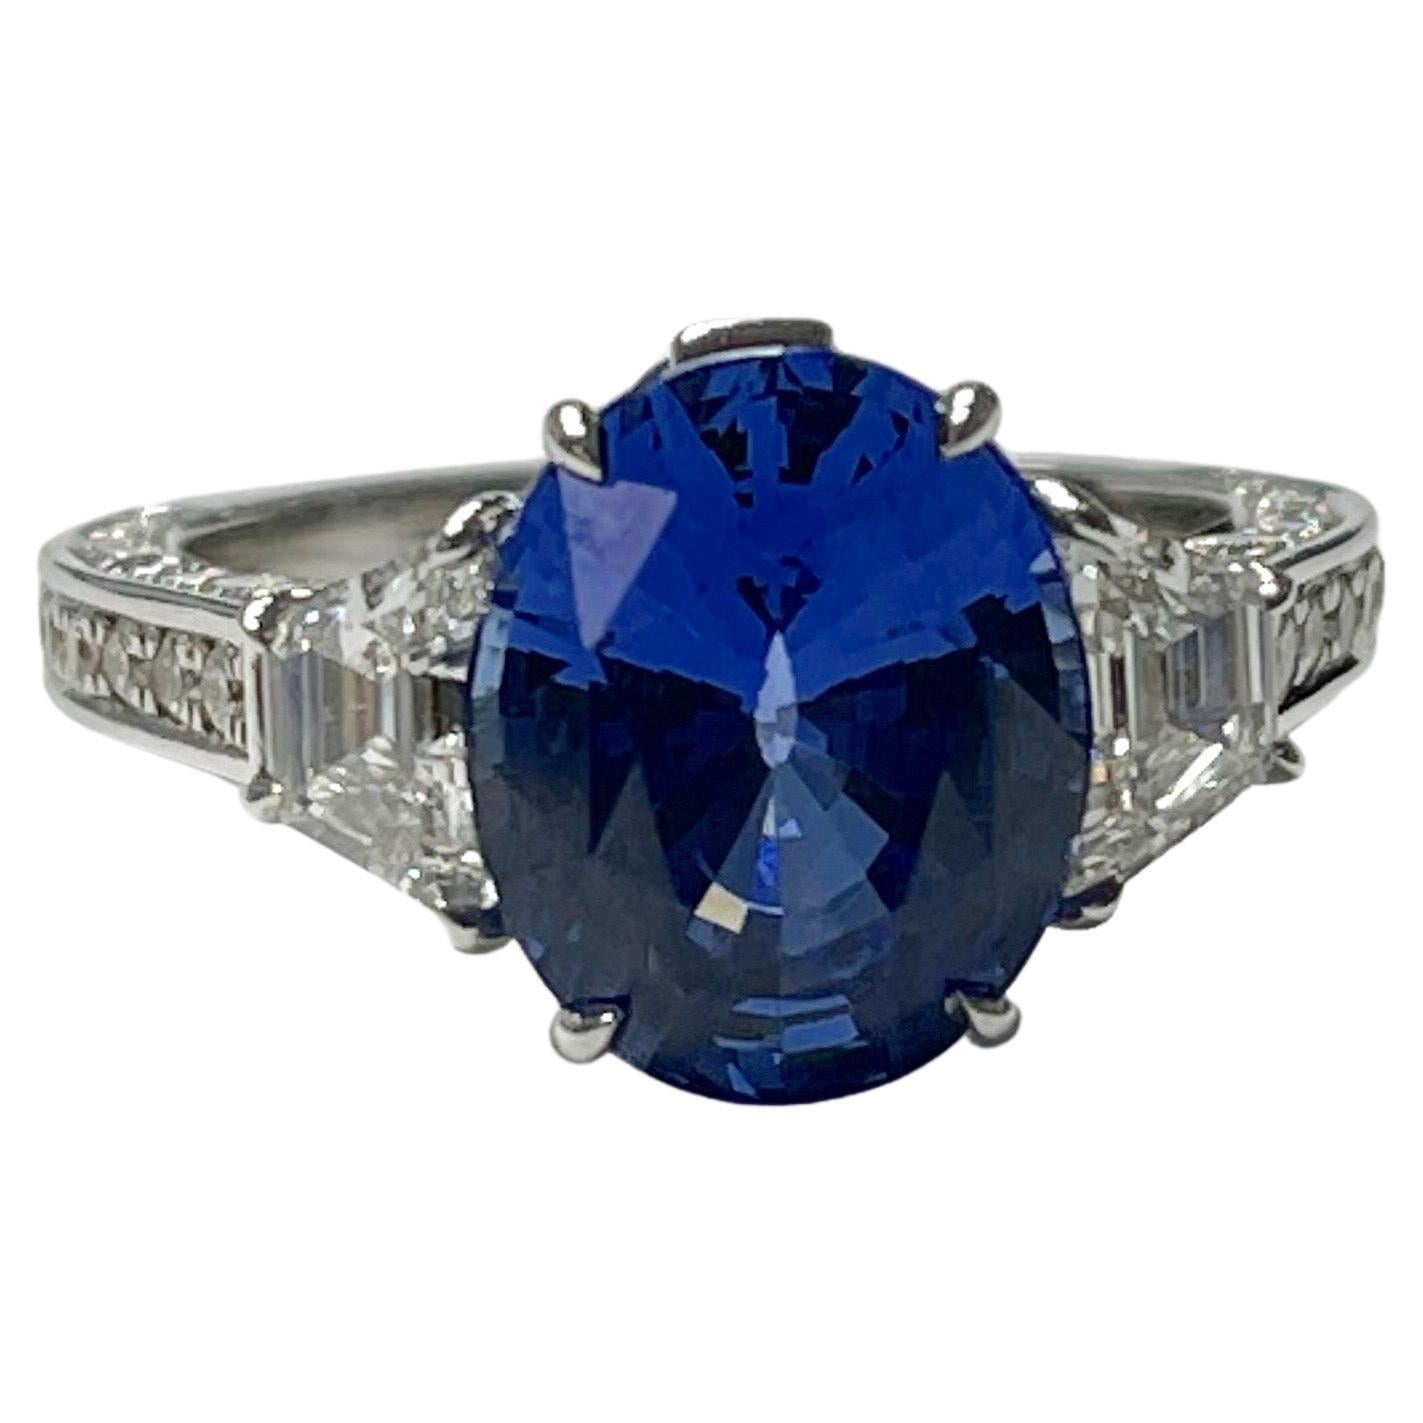 Verlobungsring mit 5,06 Karat ovalem blauem Saphir und Diamant, C.Dunaigre zertifiziert. 